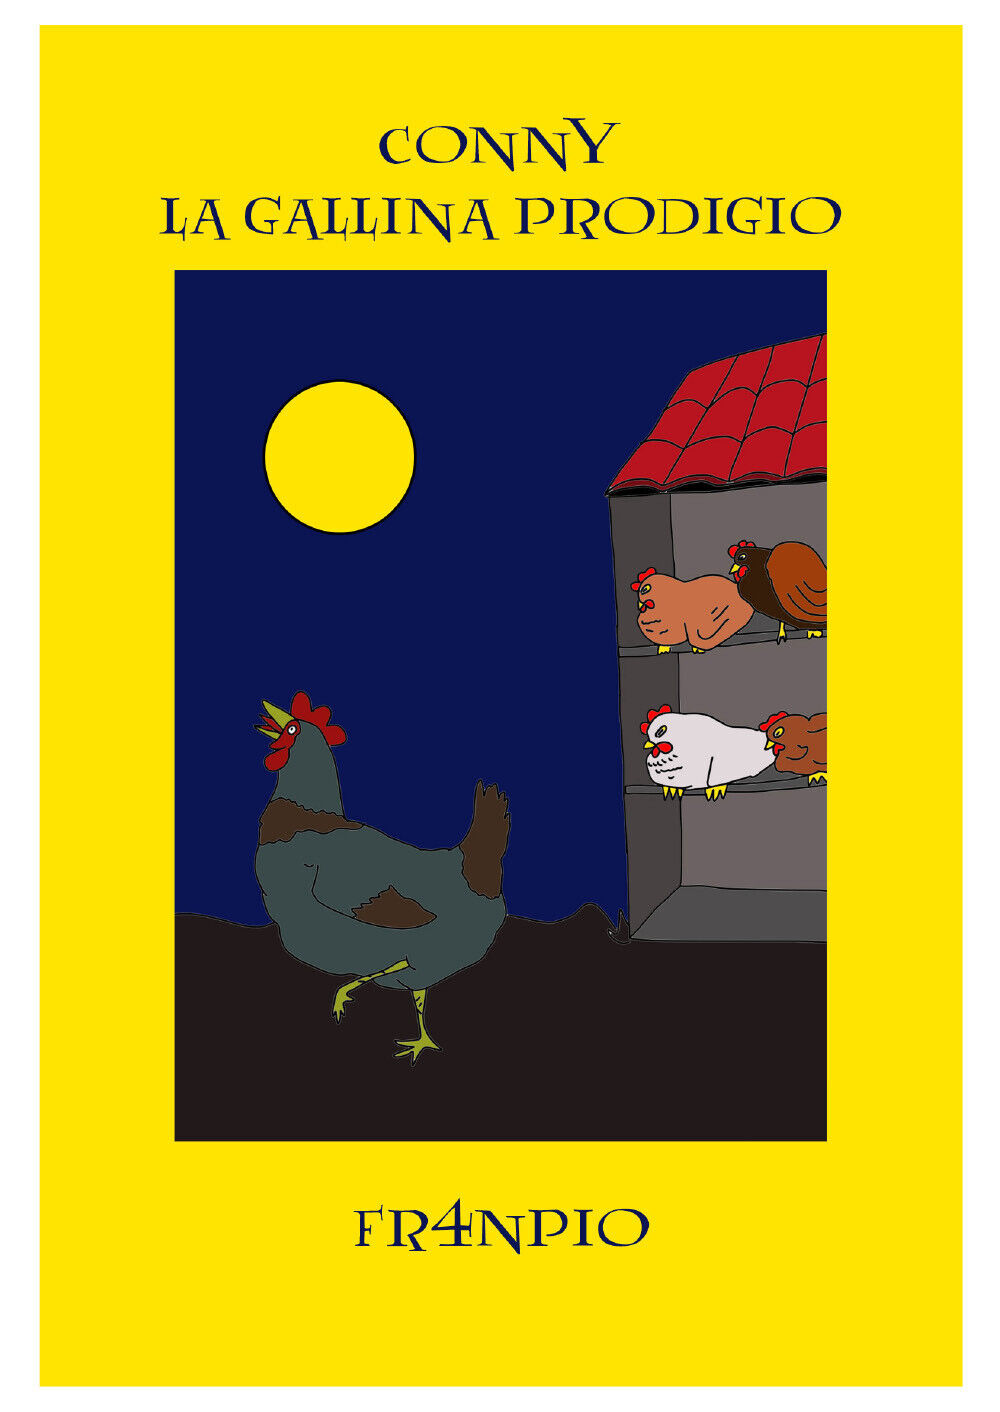   Conny la gallina prodigio - Fr4npio,  2020,  Youcanprint